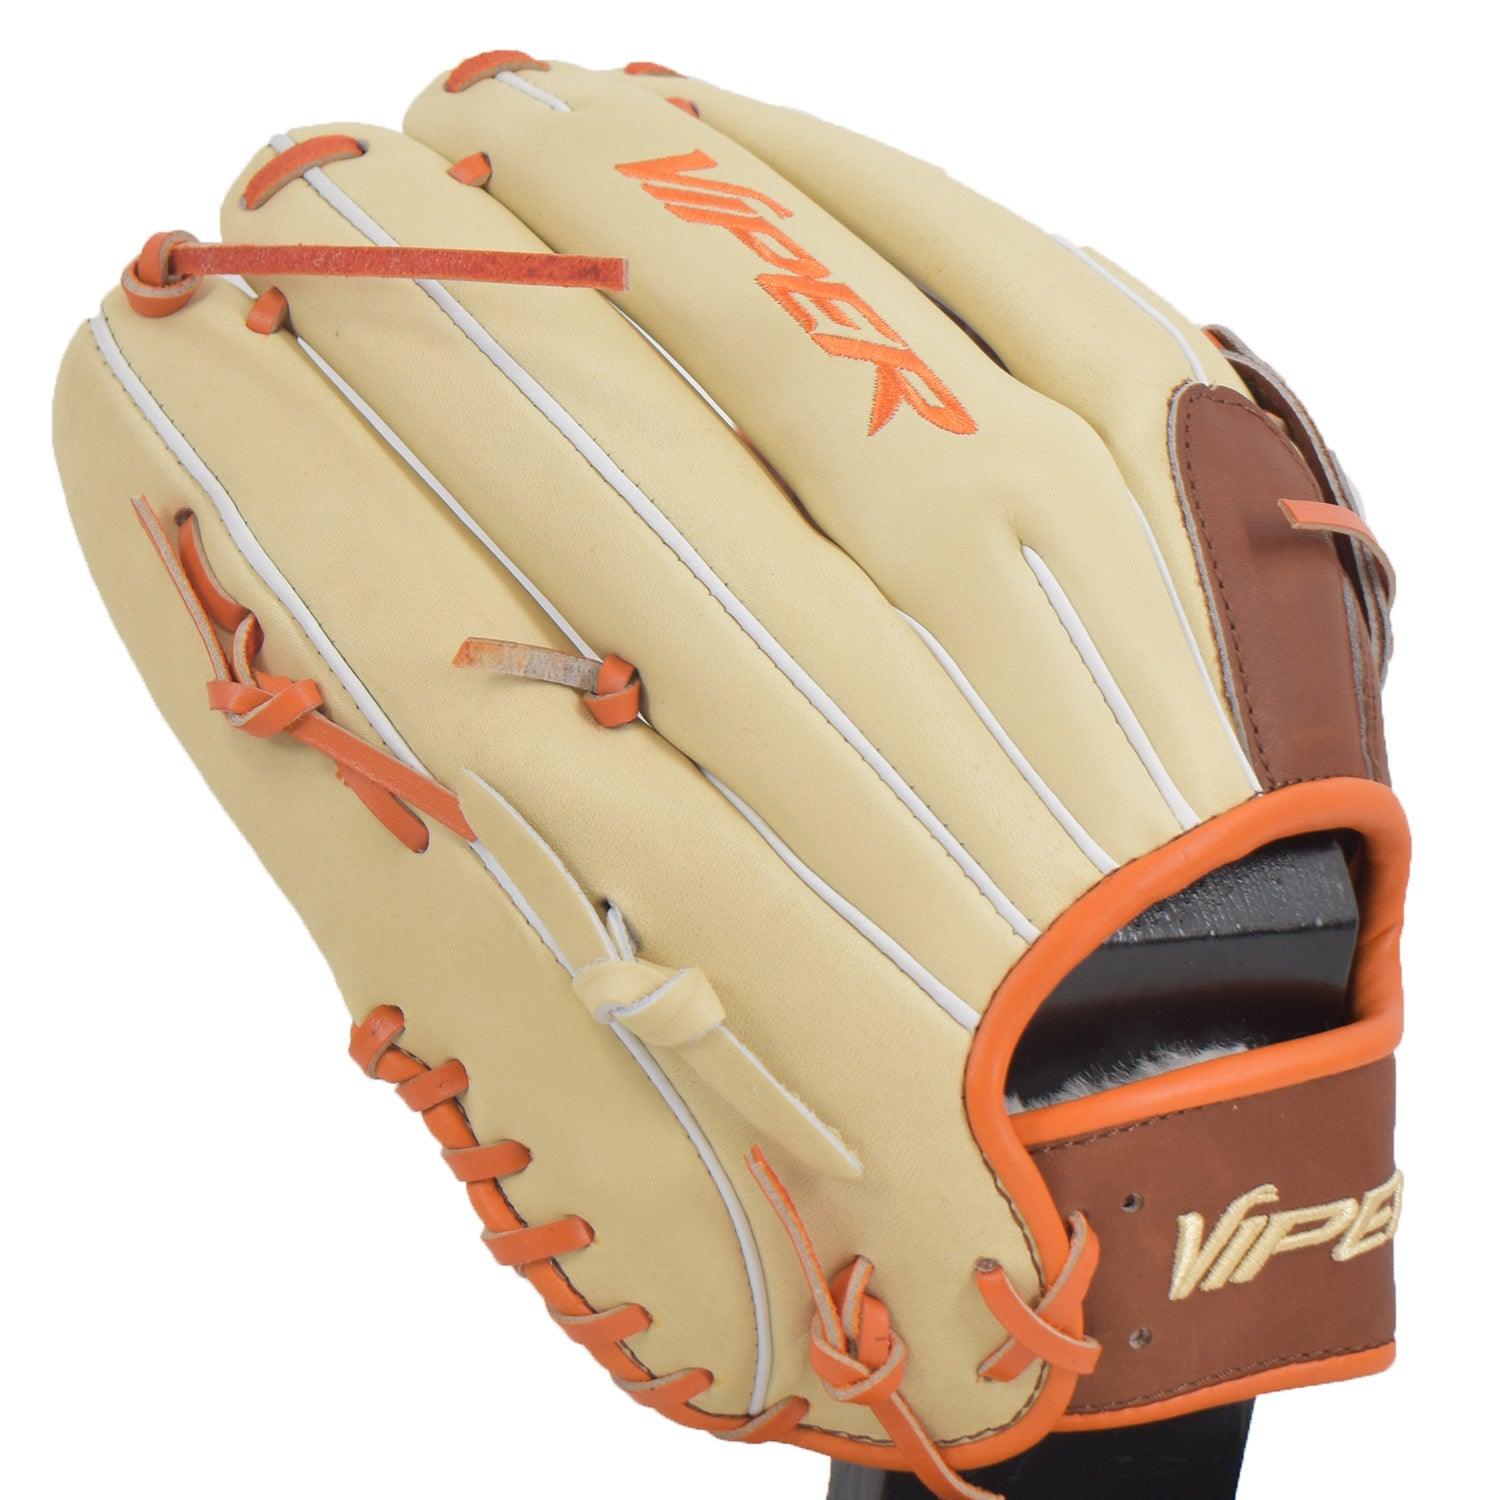 Viper Japanese Kip Leather Slowpitch Softball Fielding Glove Carmel Tan Orange - Smash It Sports